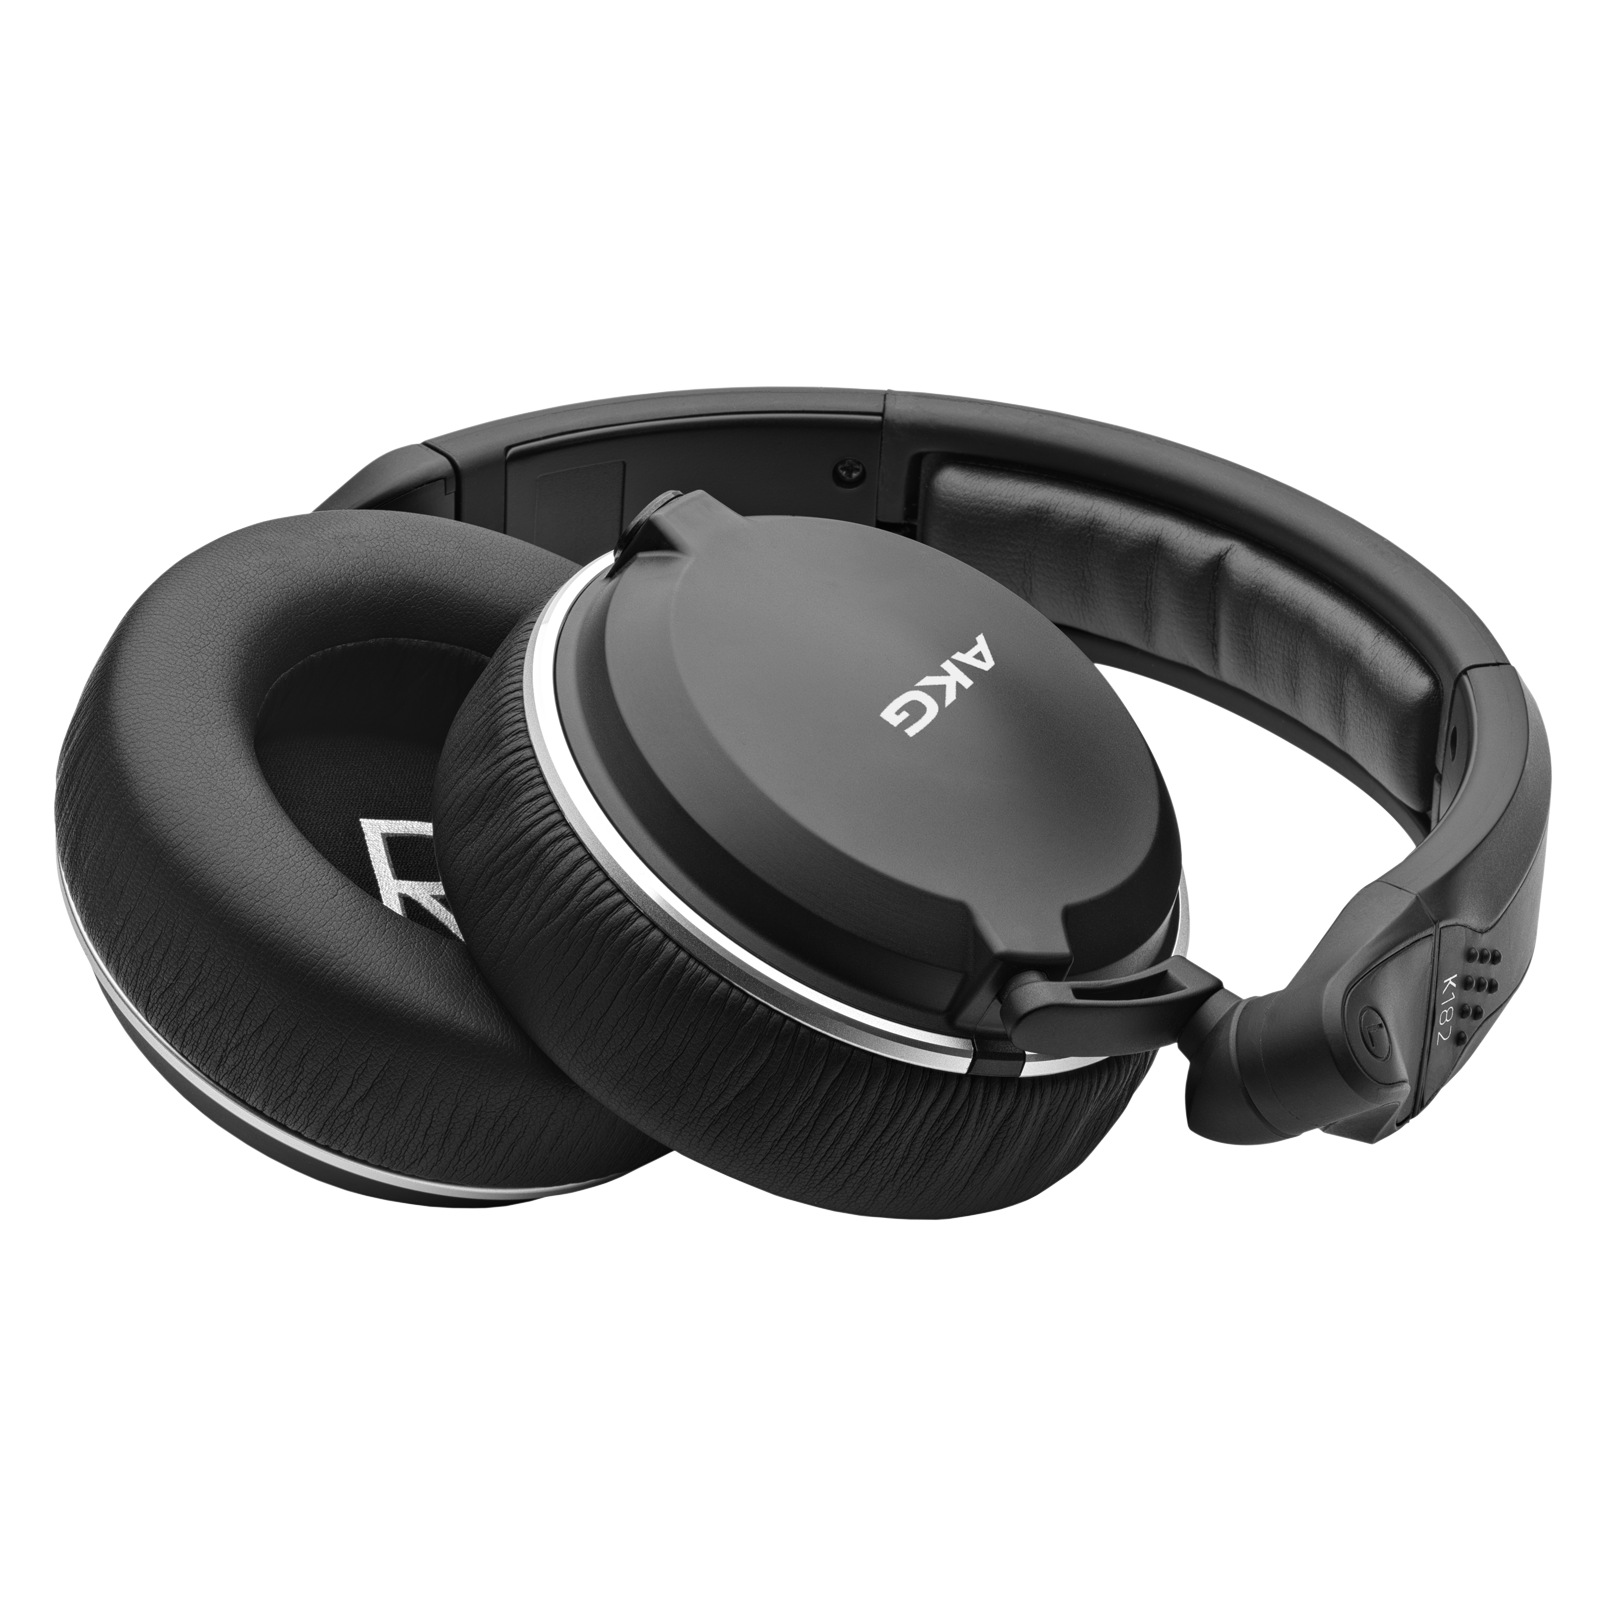 K182 - Black - Professional closed-back monitor headphones - Detailshot 1